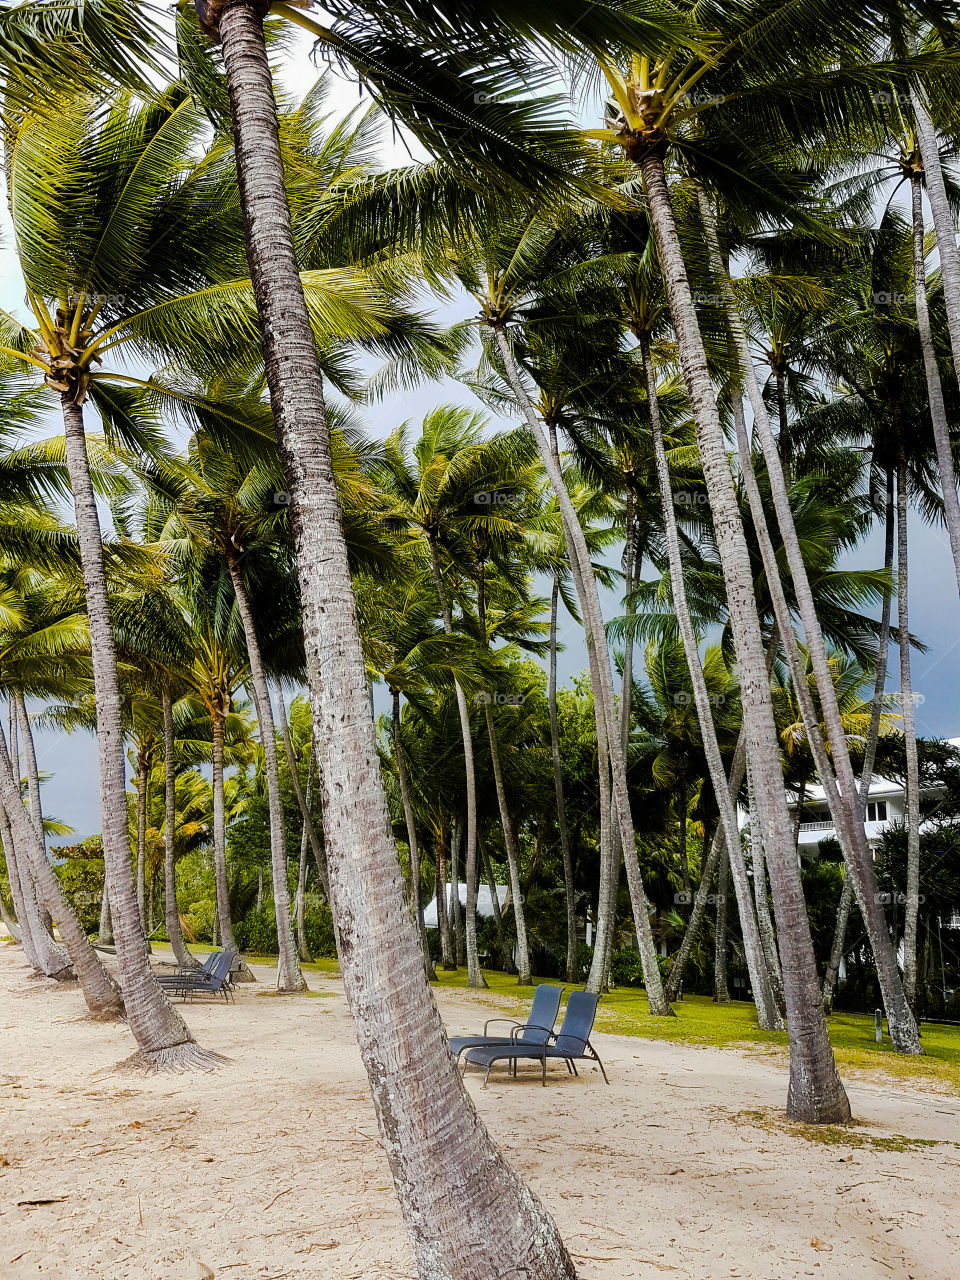 View of palm cove beach